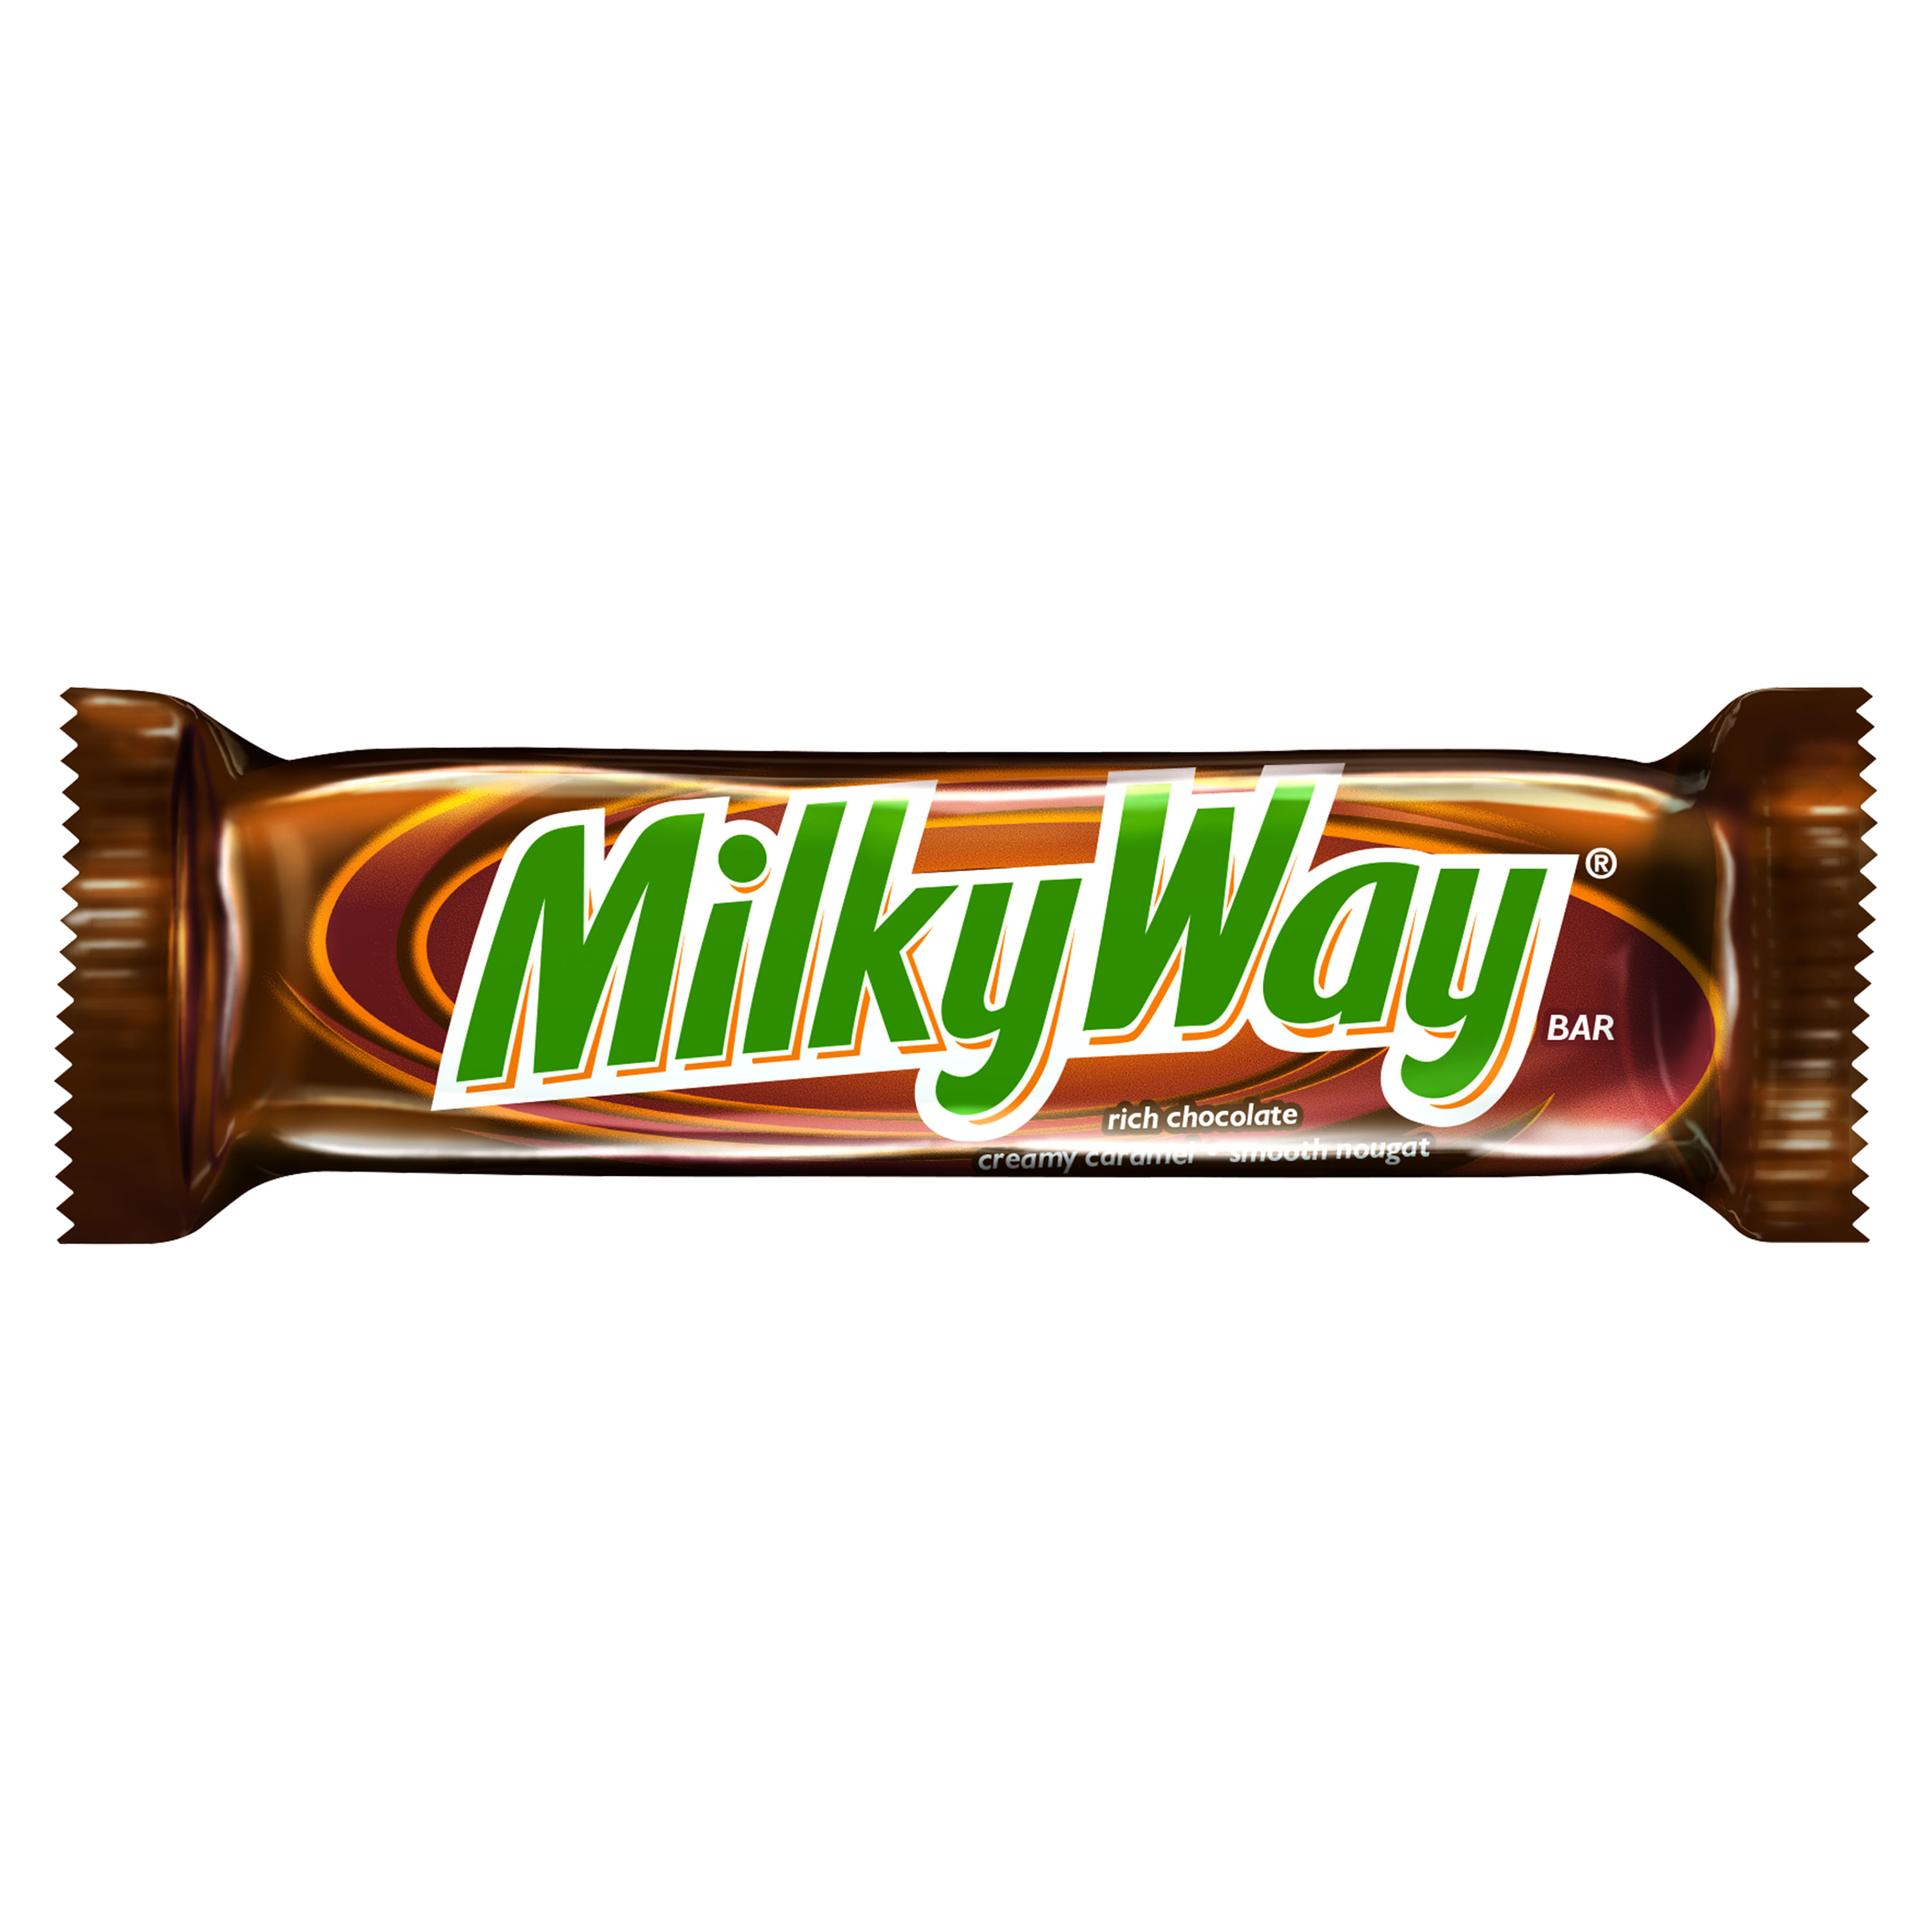 Comprar Chocolate Milky Way - 52.2gr | Walmart Guatemala - Maxi ...